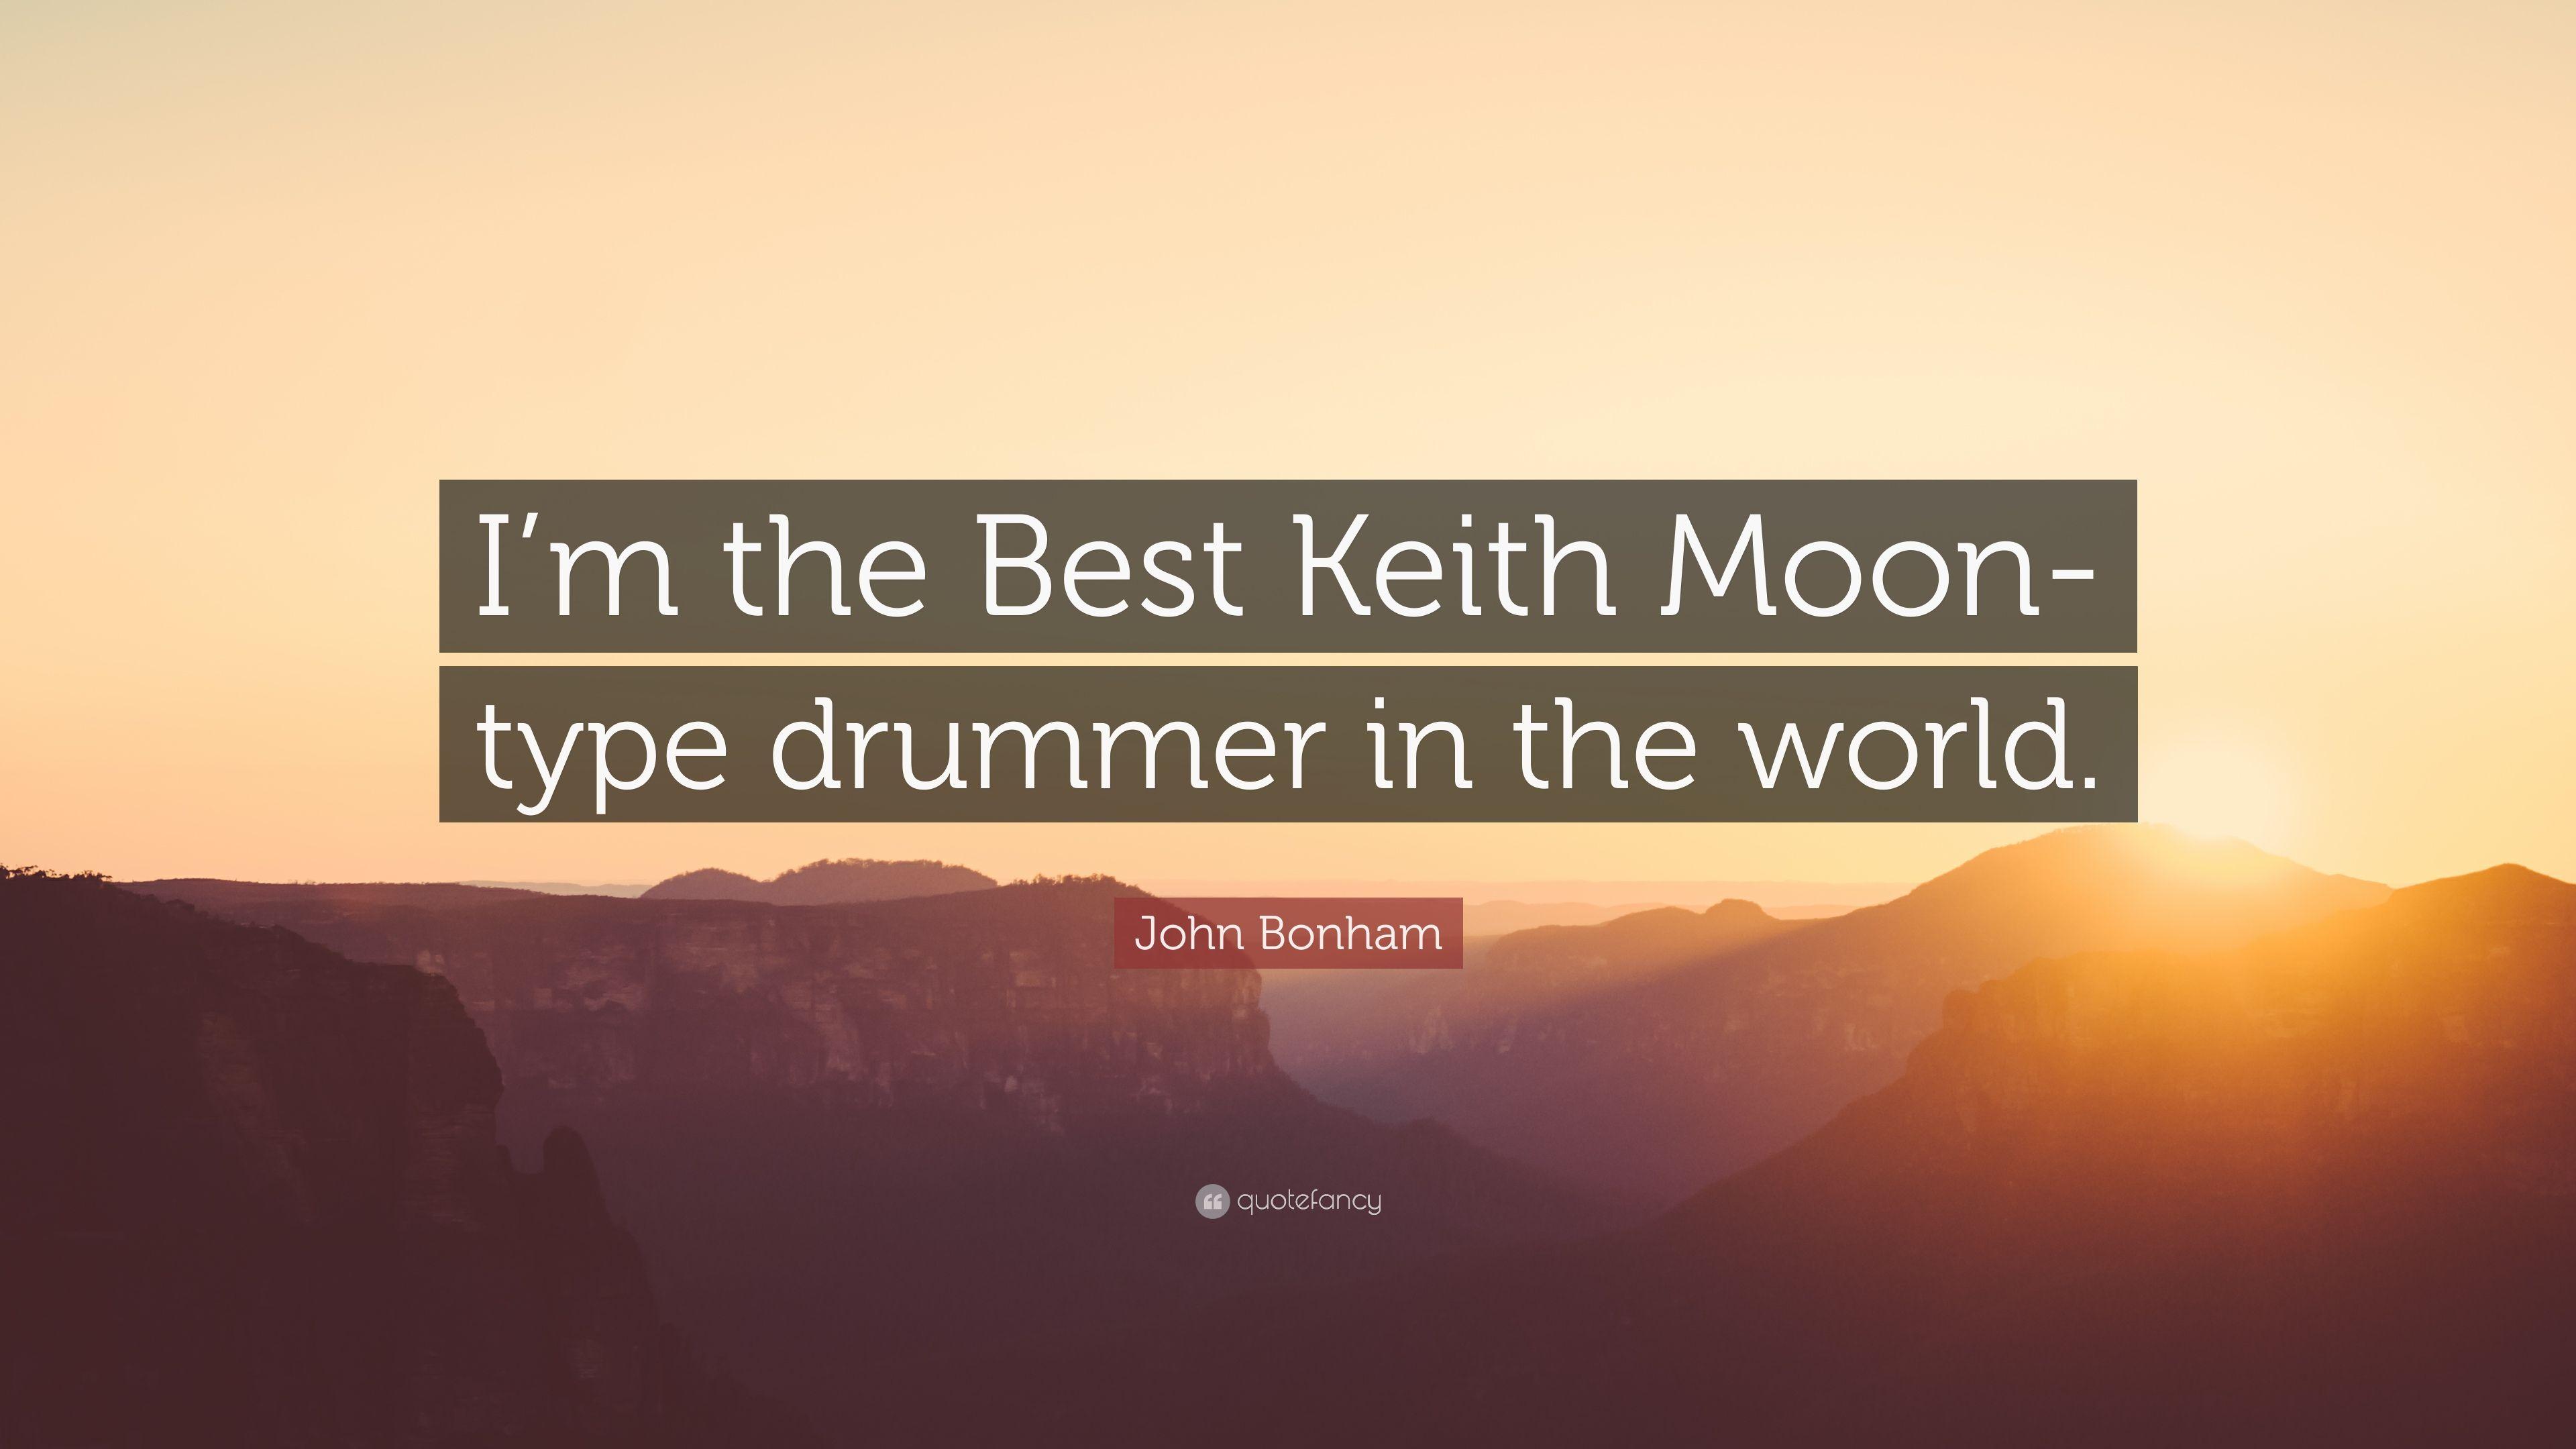 John Bonham Quote: “I'm The Best Keith Moon Type Drummer In